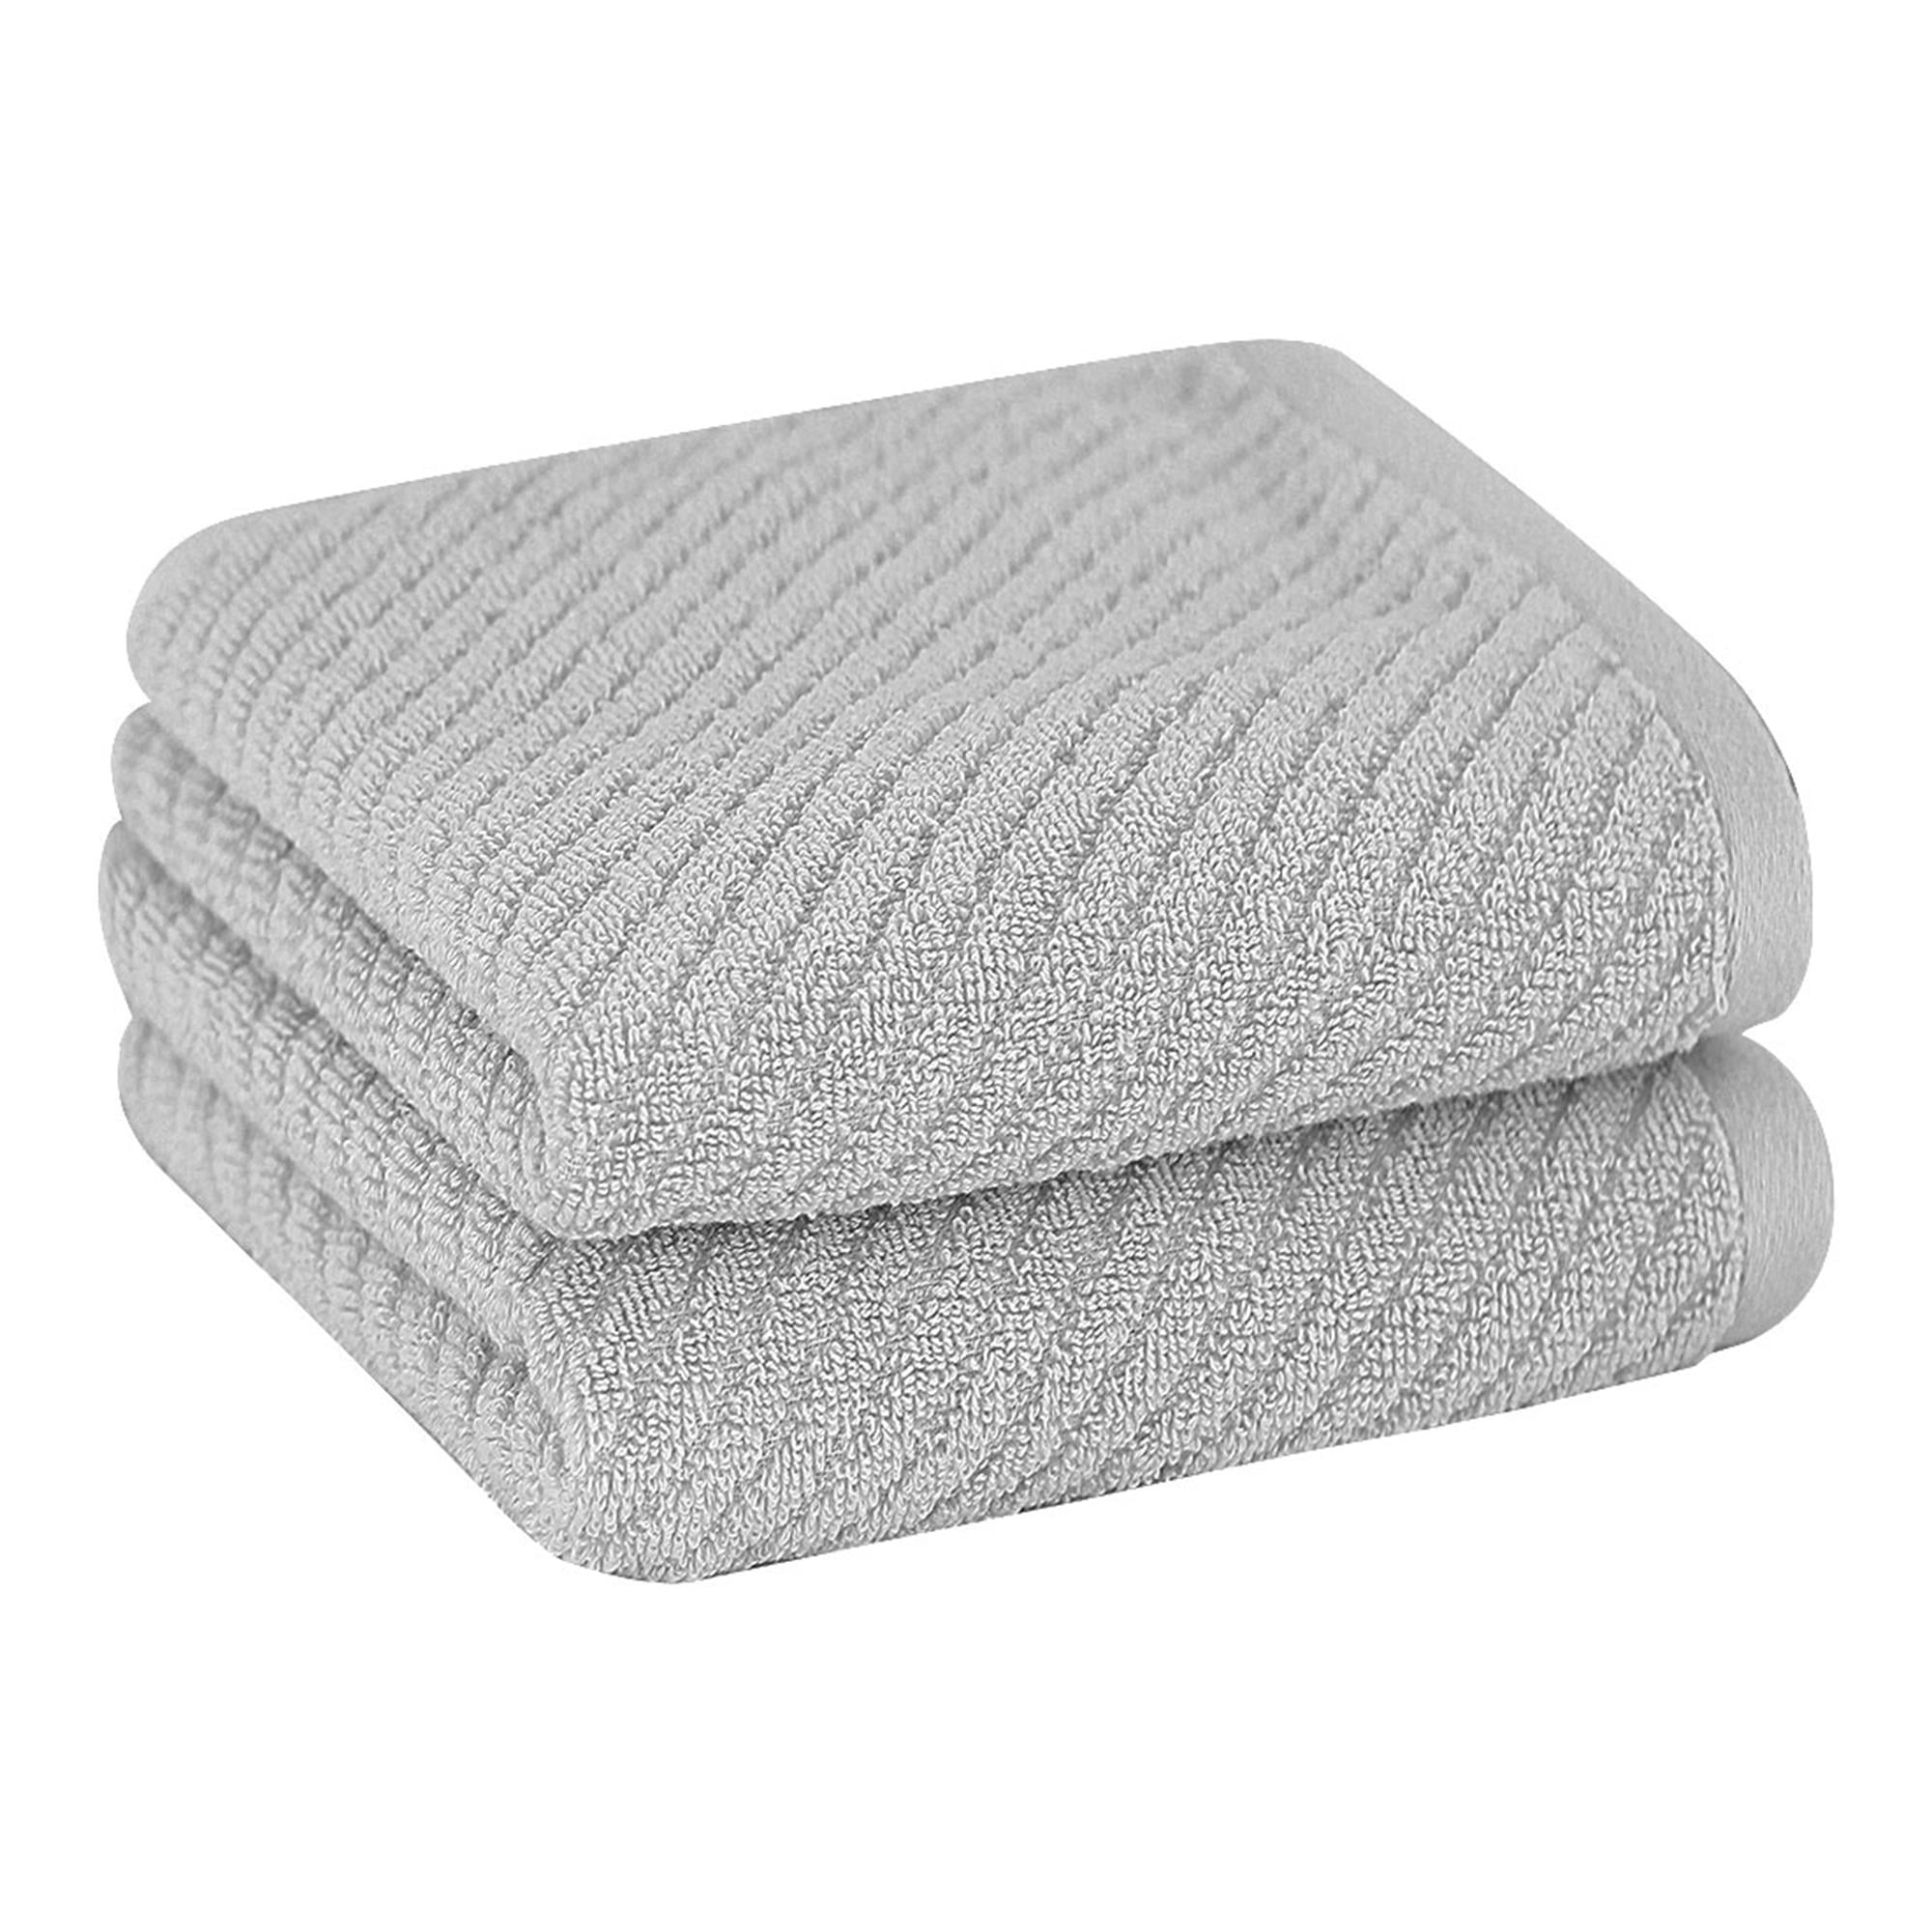 Room Essentials-Hand Towel Set 2pk Flat Gray 100% Cotton Terry Cloth 16*28 